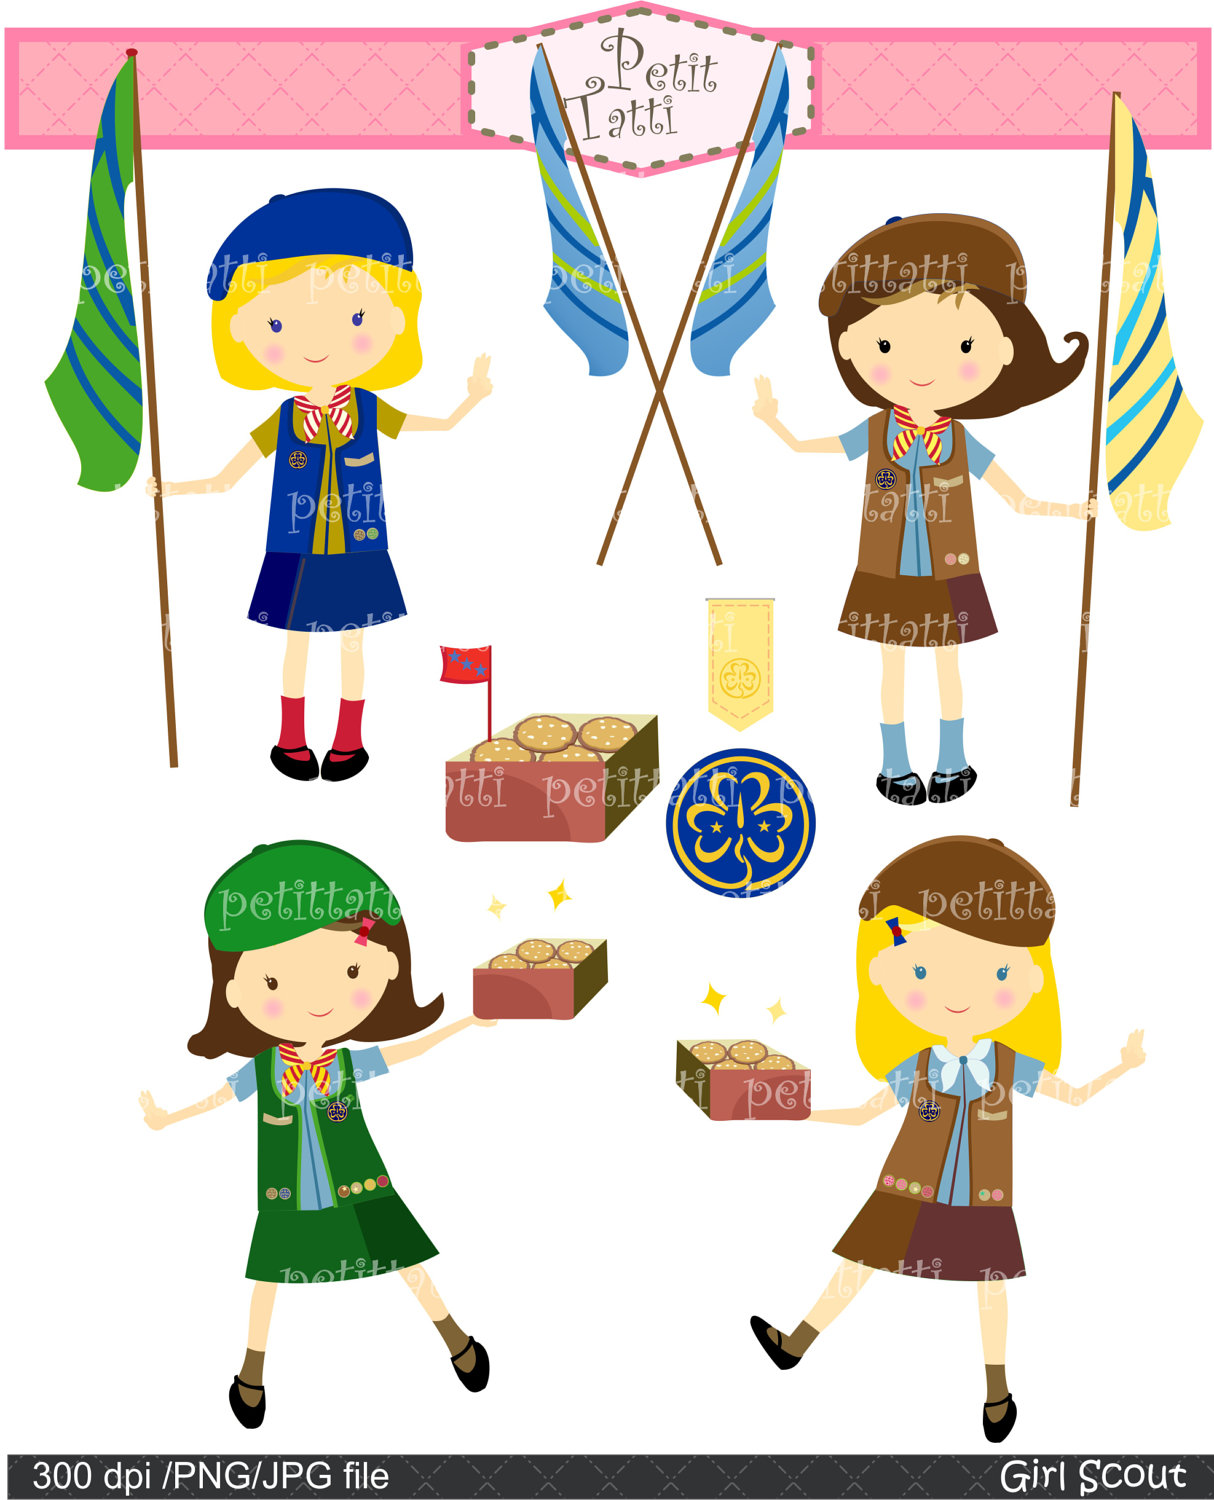 Pin Digital Clip Art For All Usegirl Scout Girl Guides On Pinterest